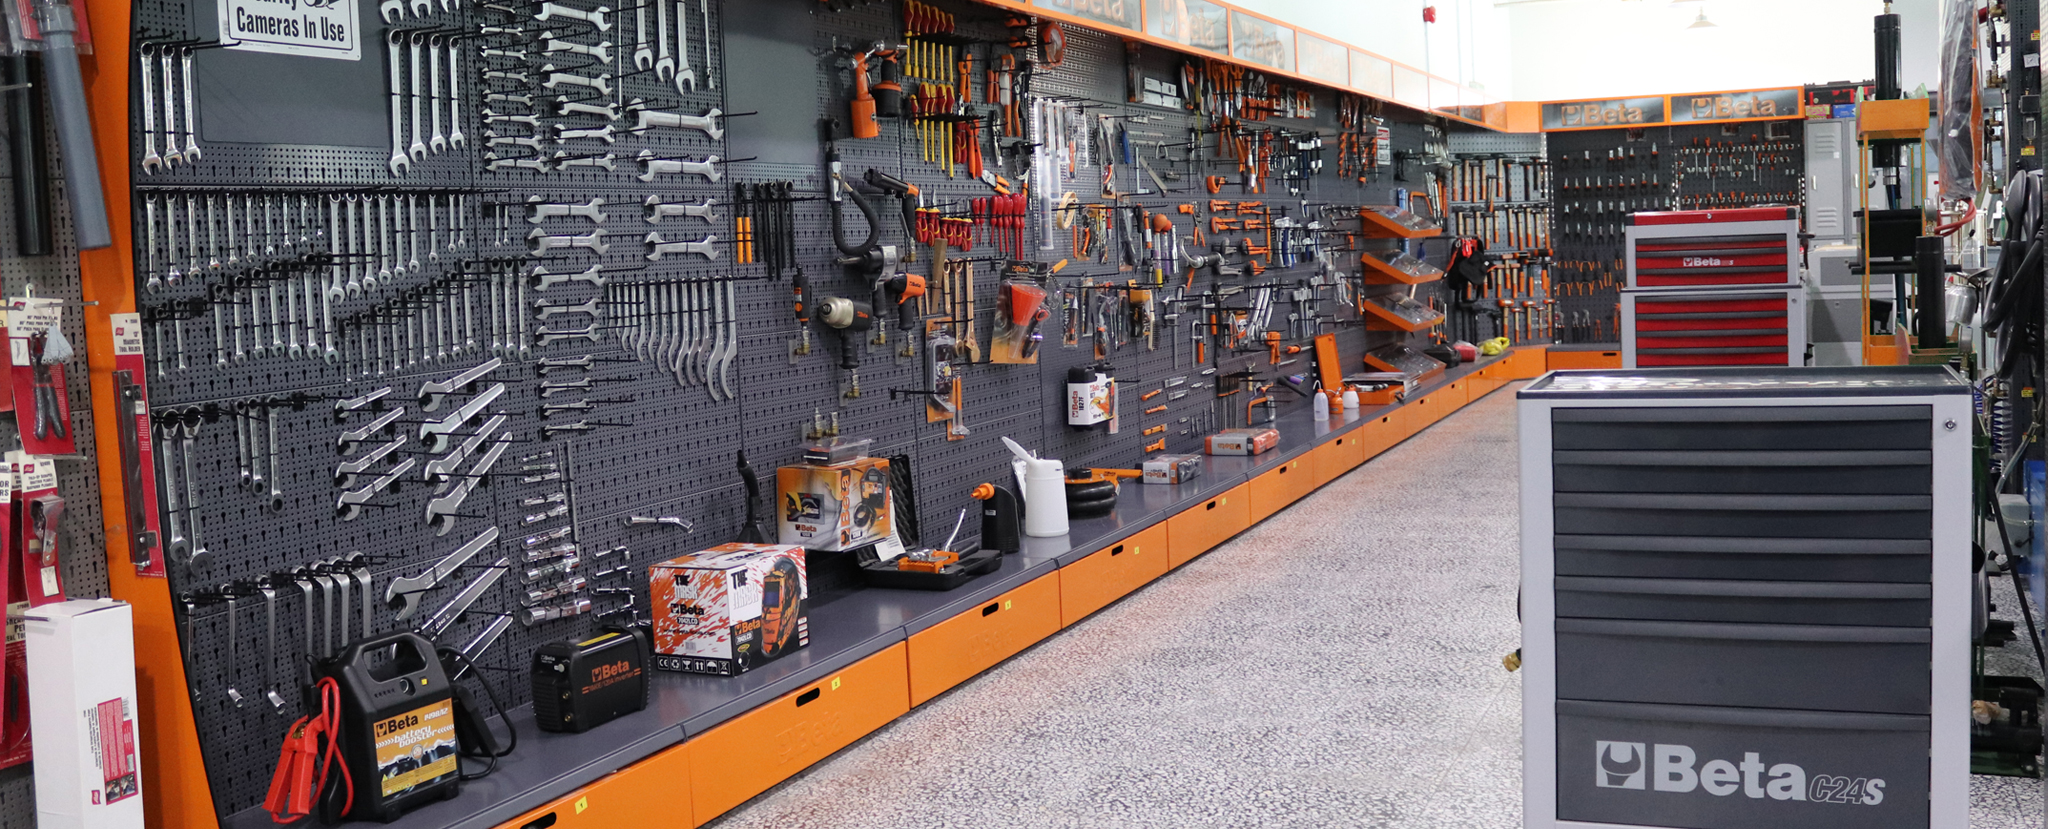 Detailing Tools Dubai, Online Tools & Equipment Shop UAE